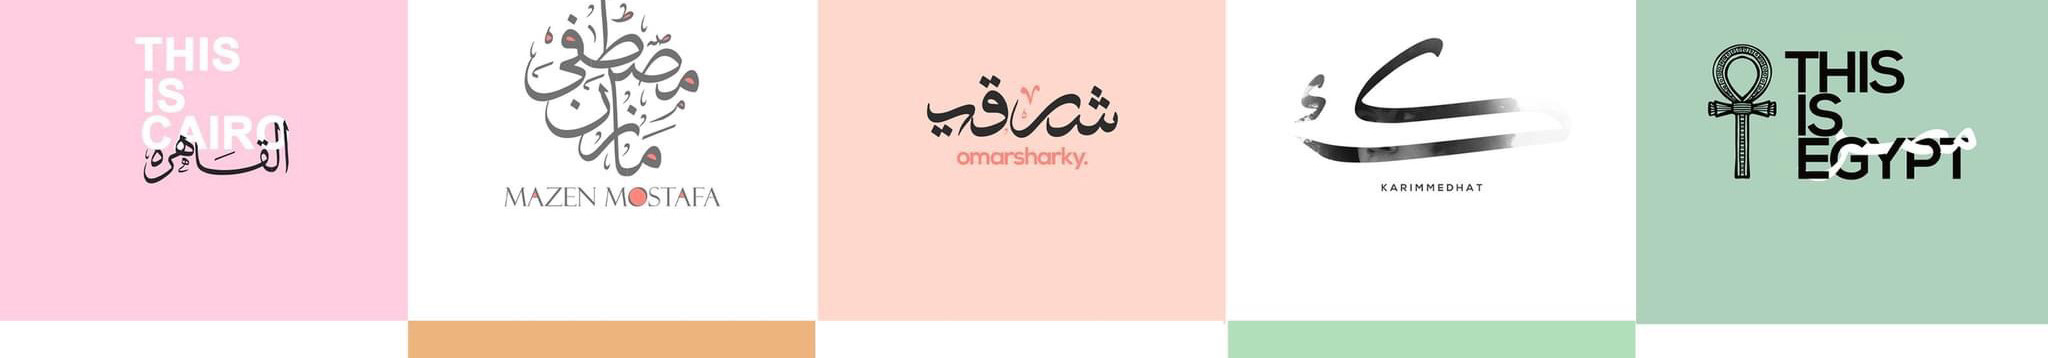 Banner de perfil de Usama Nabil ✪